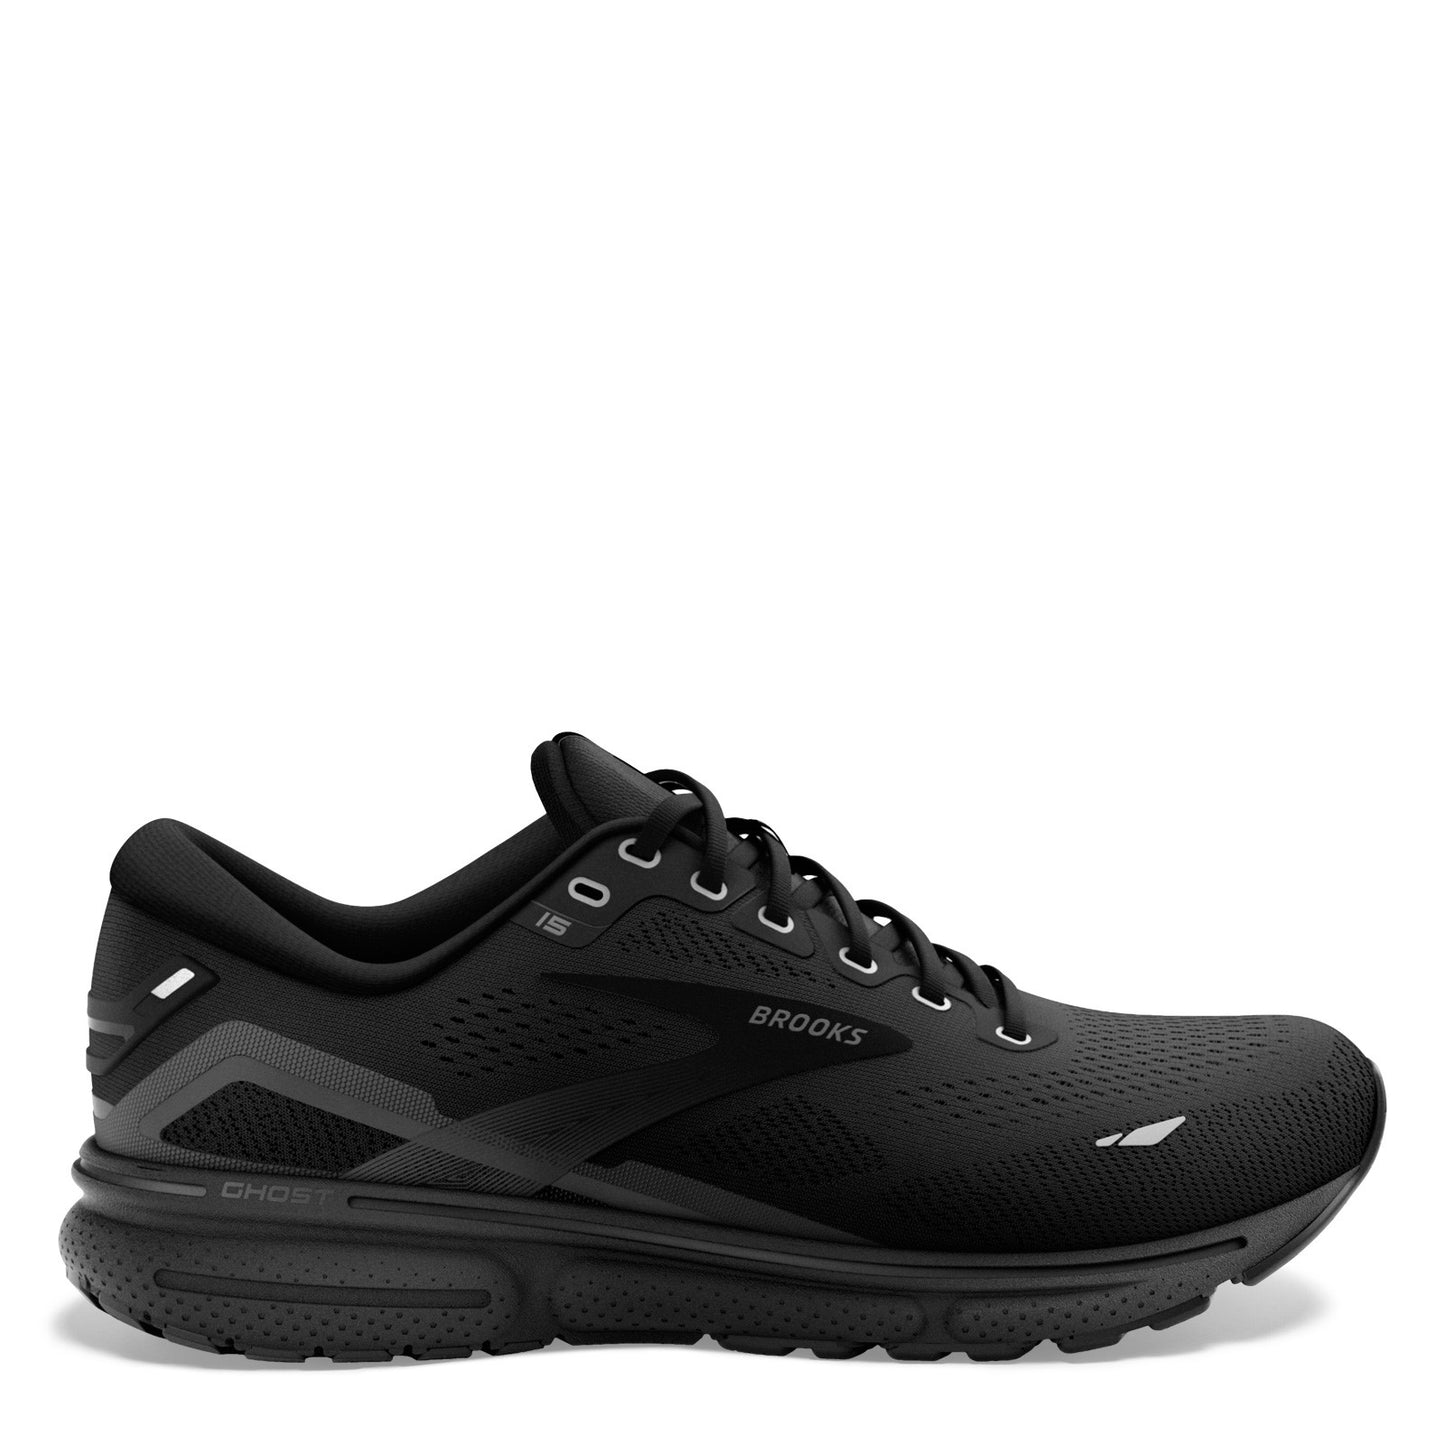 Peltz Shoes  Men's Brooks Ghost 15 Running Shoe - Wide Width Black/White 110393 2E 020